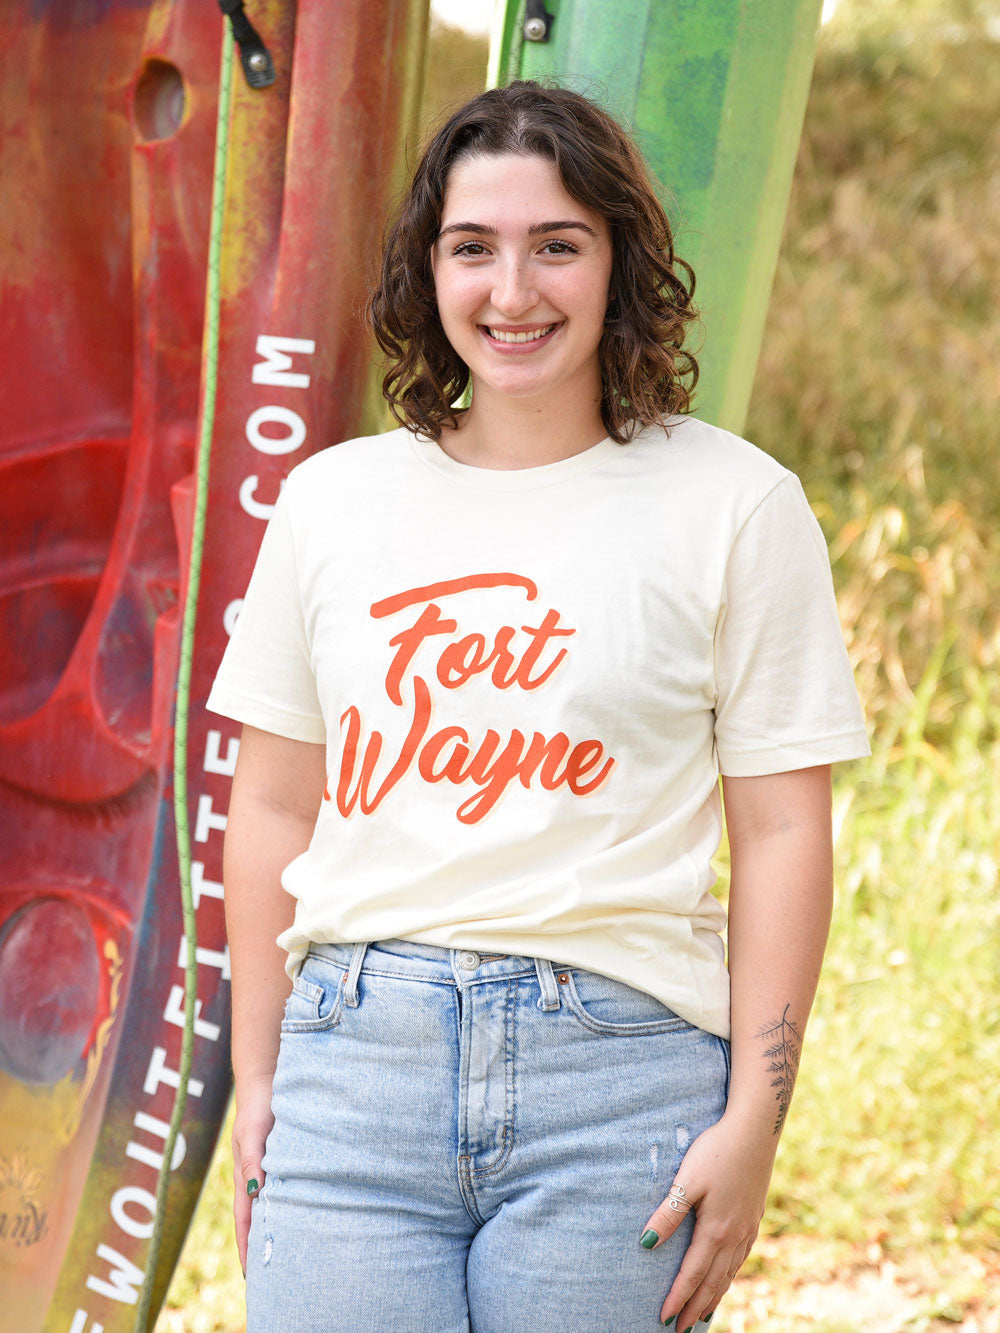 Orange ink Script Fort Wayne t-shirt on model by colorful kayaks